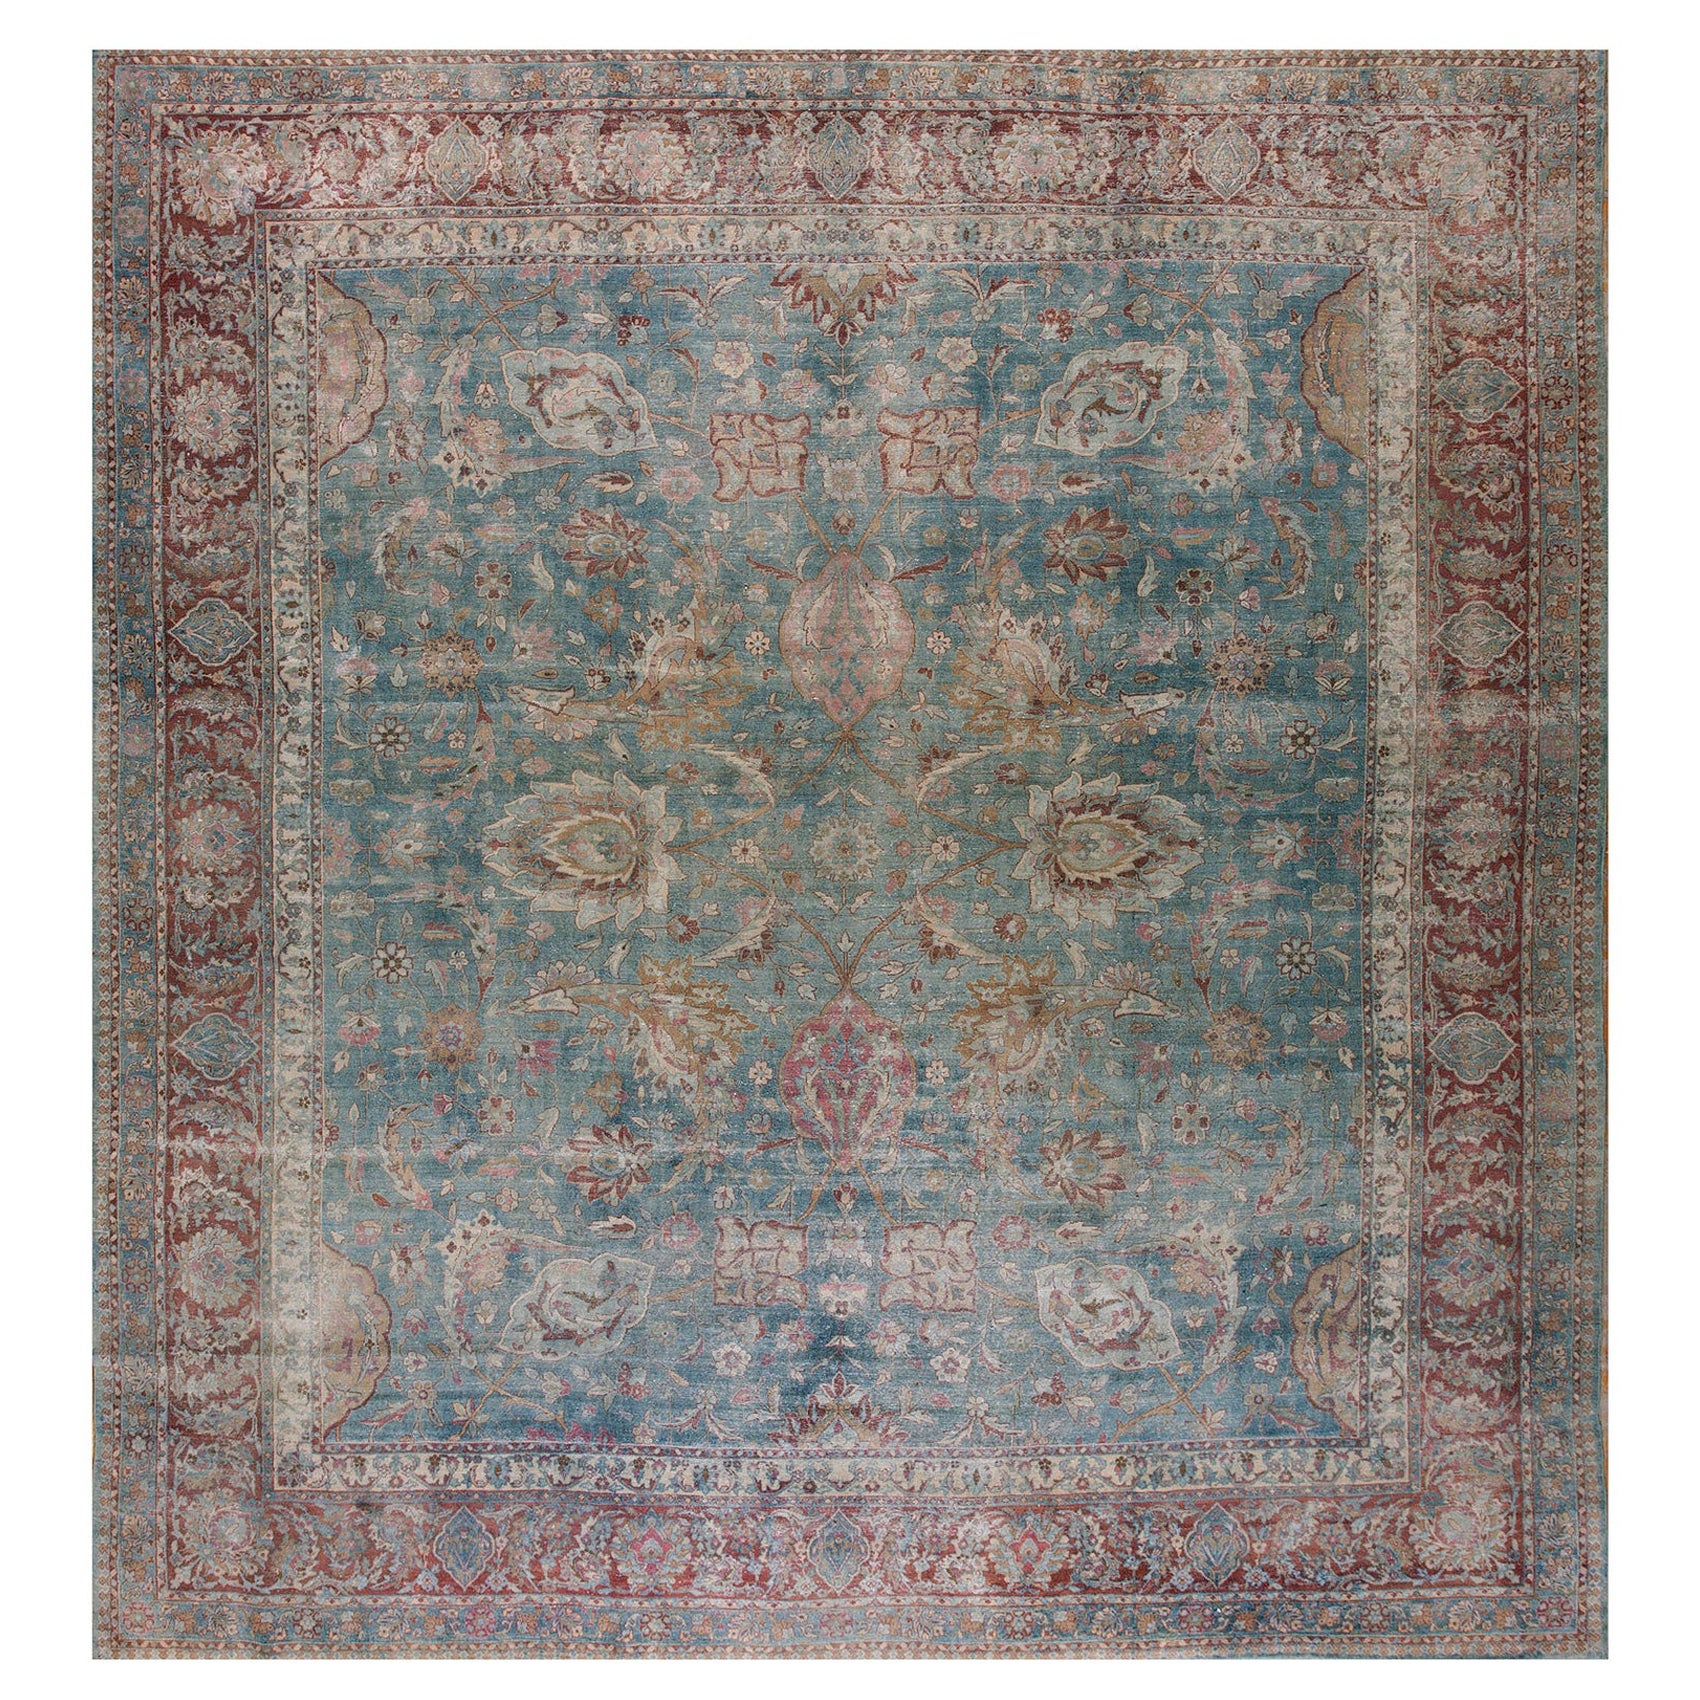 Early 20th Century Persian Kerman Carpet ( 10' 10" x 11' 9" - 330 x 360 cm )